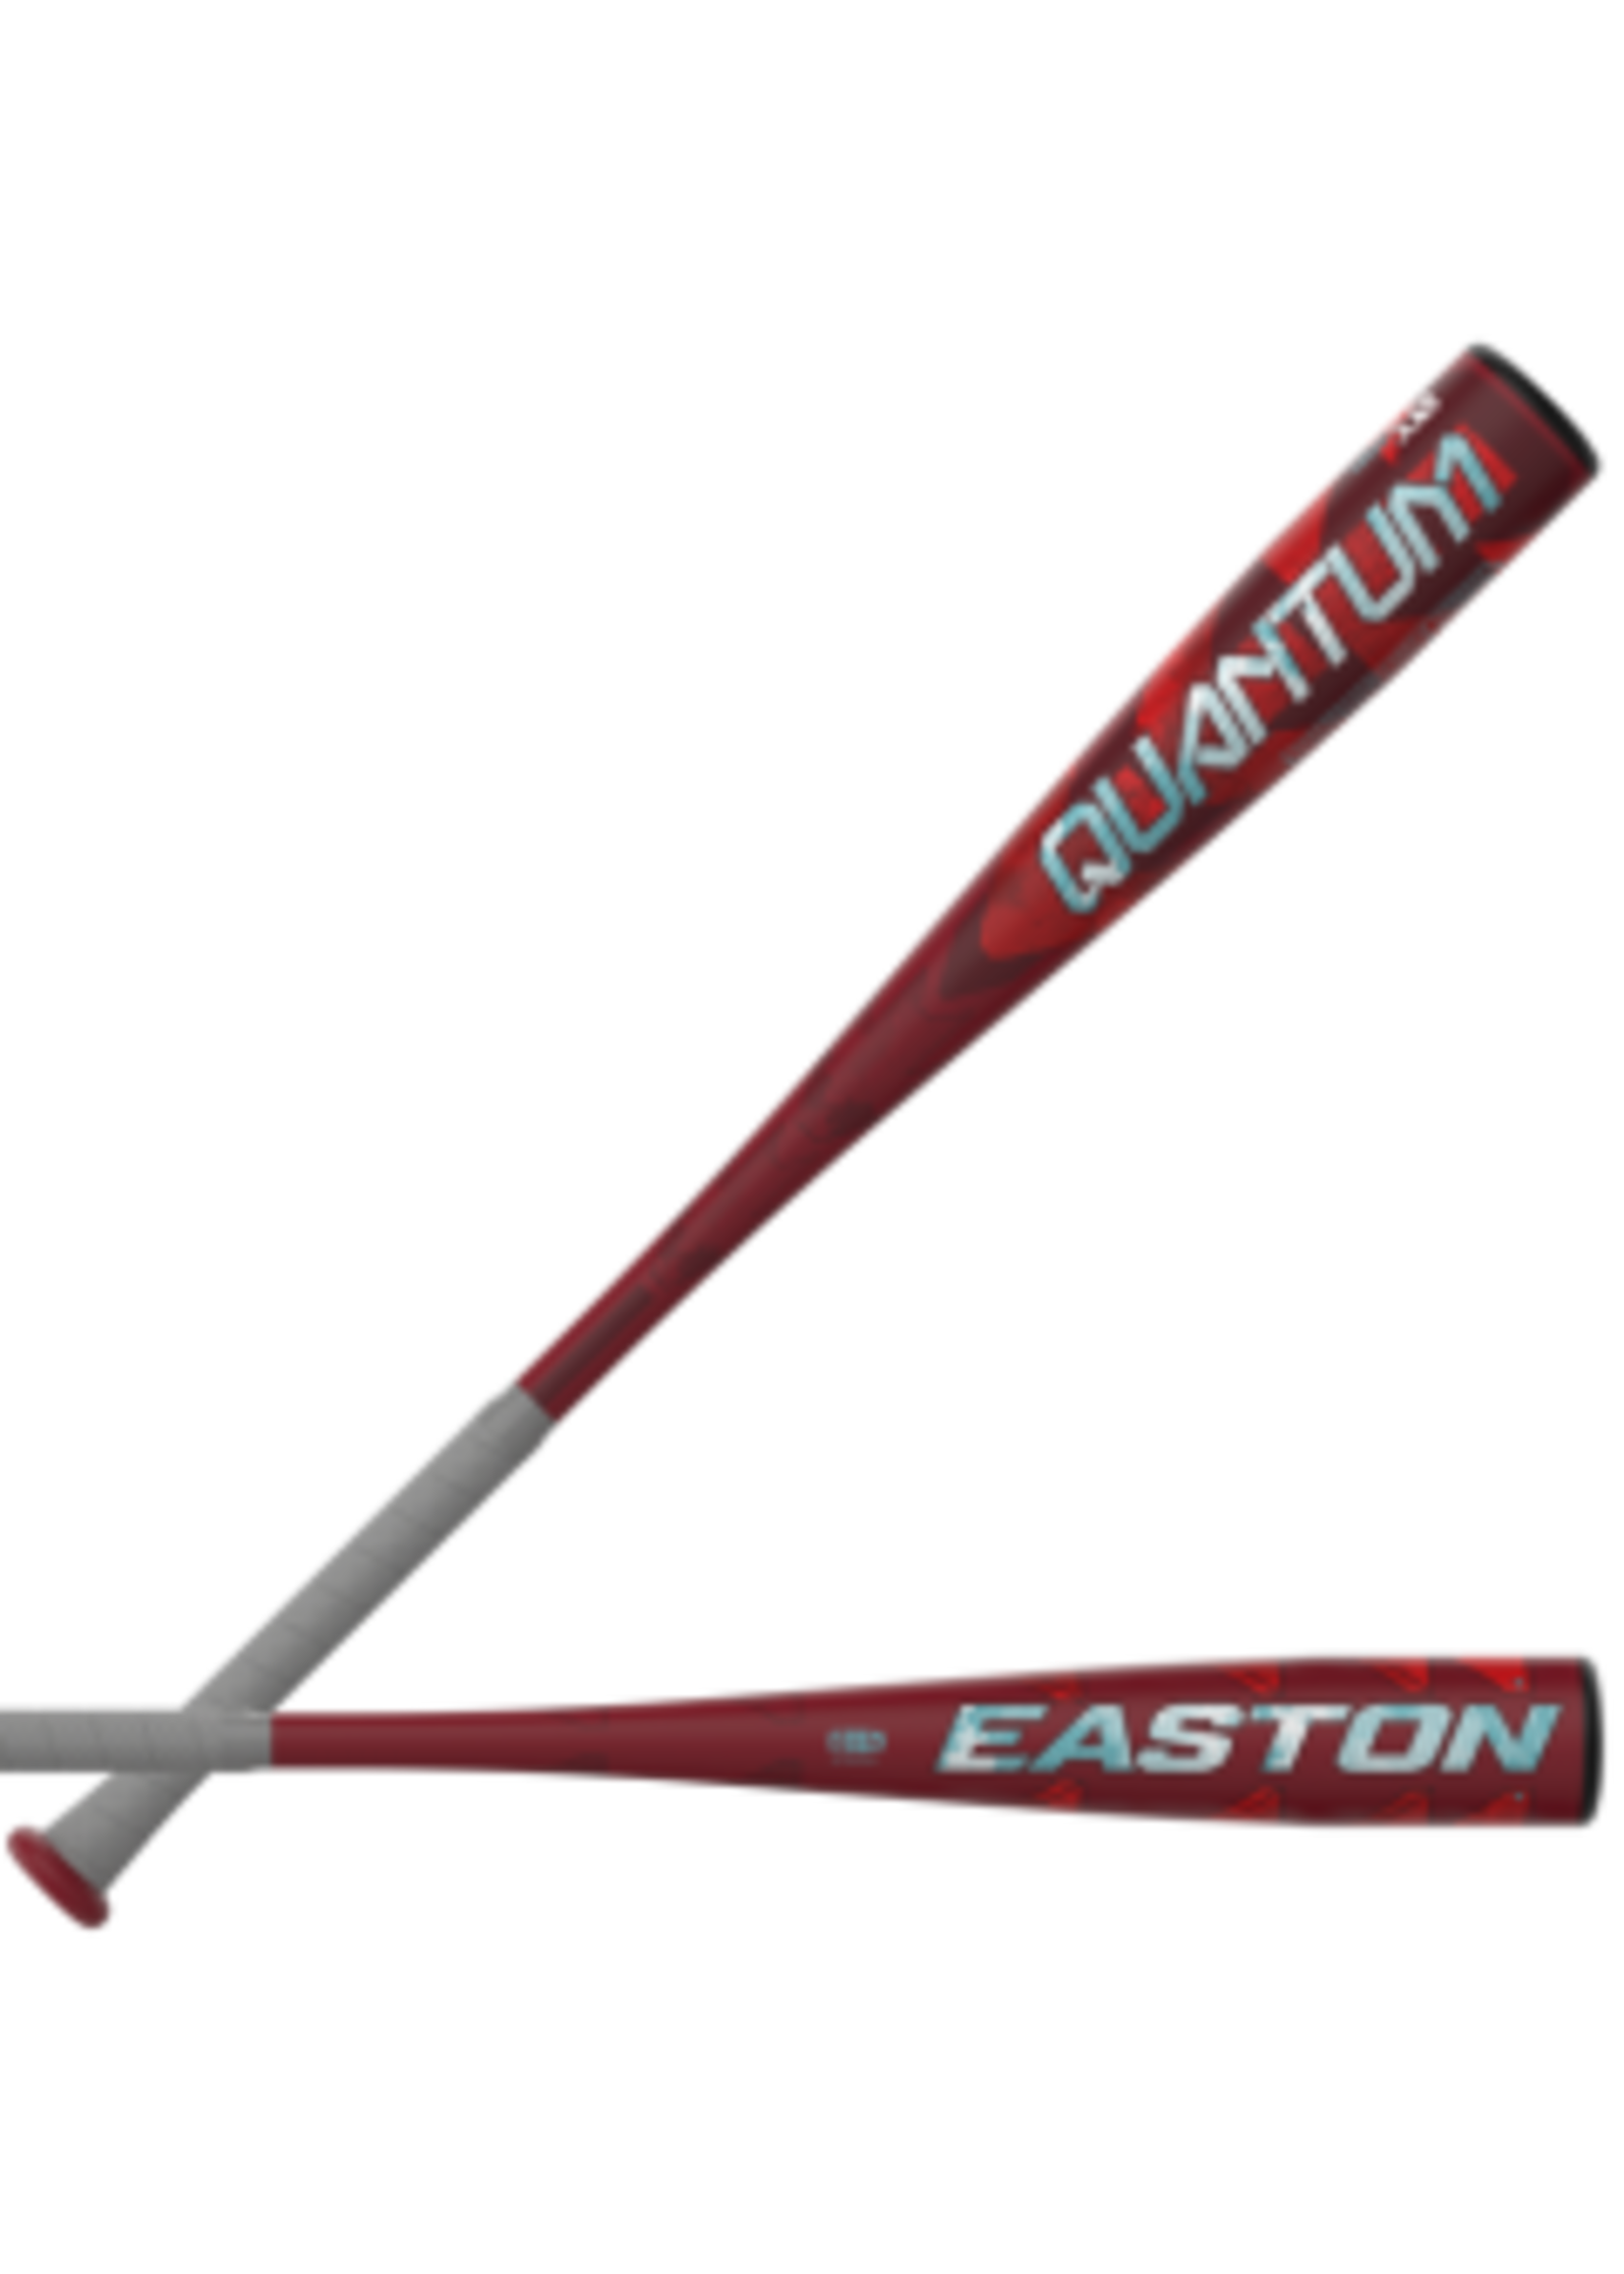 EASTON EASTON BAT QUANTUM  2 3/4  27"/17oz -10